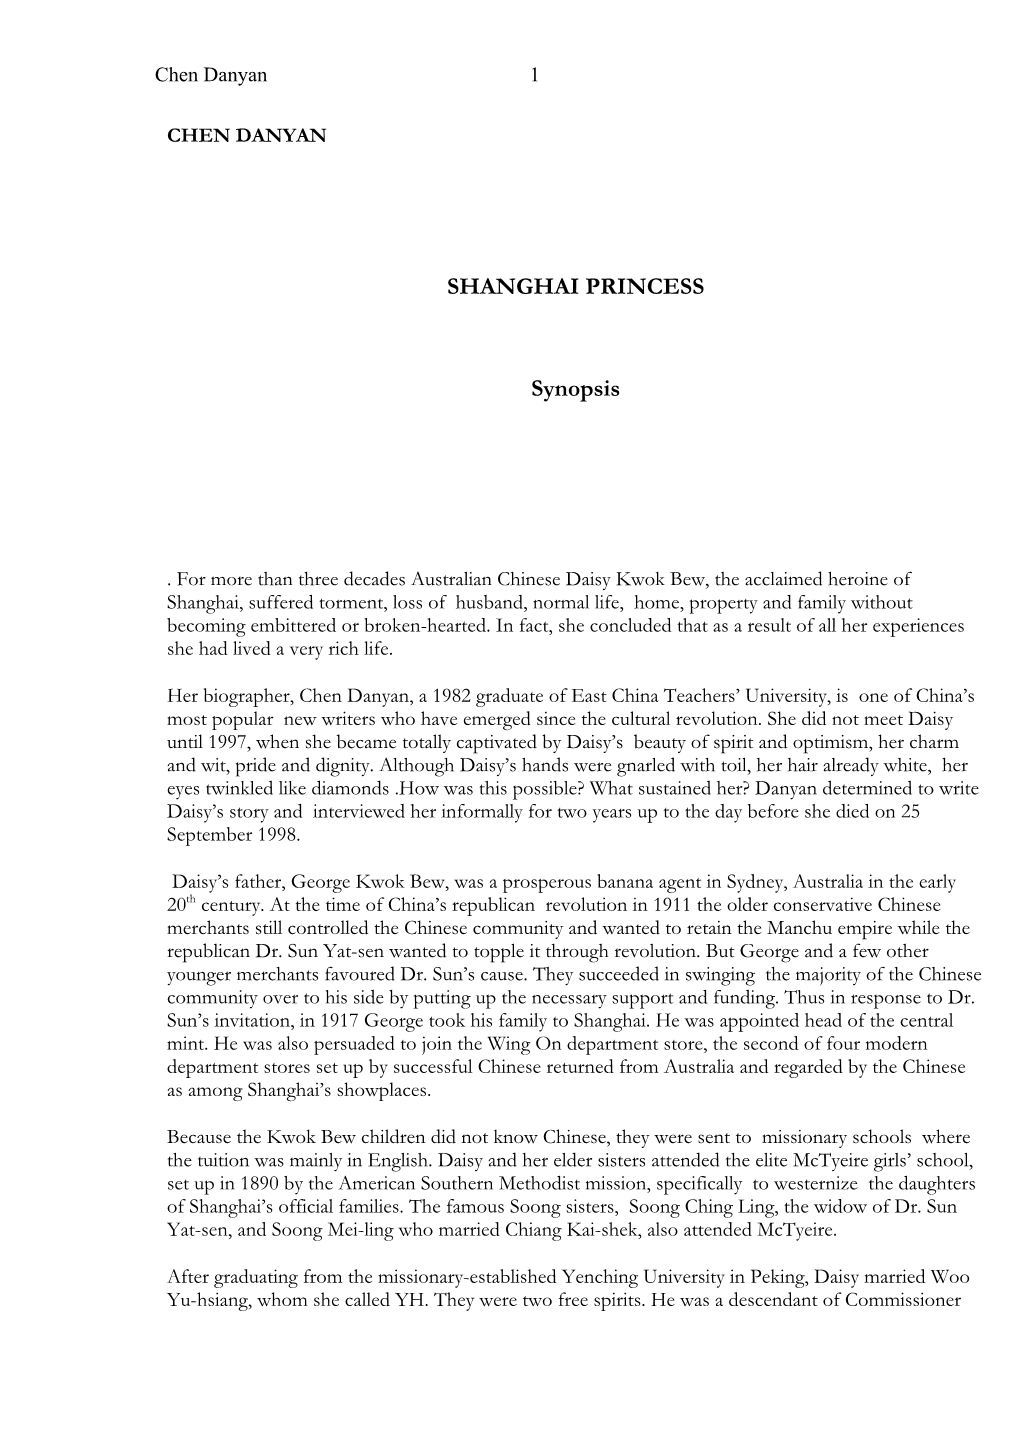 SHANGHAI PRINCESS Synopsis